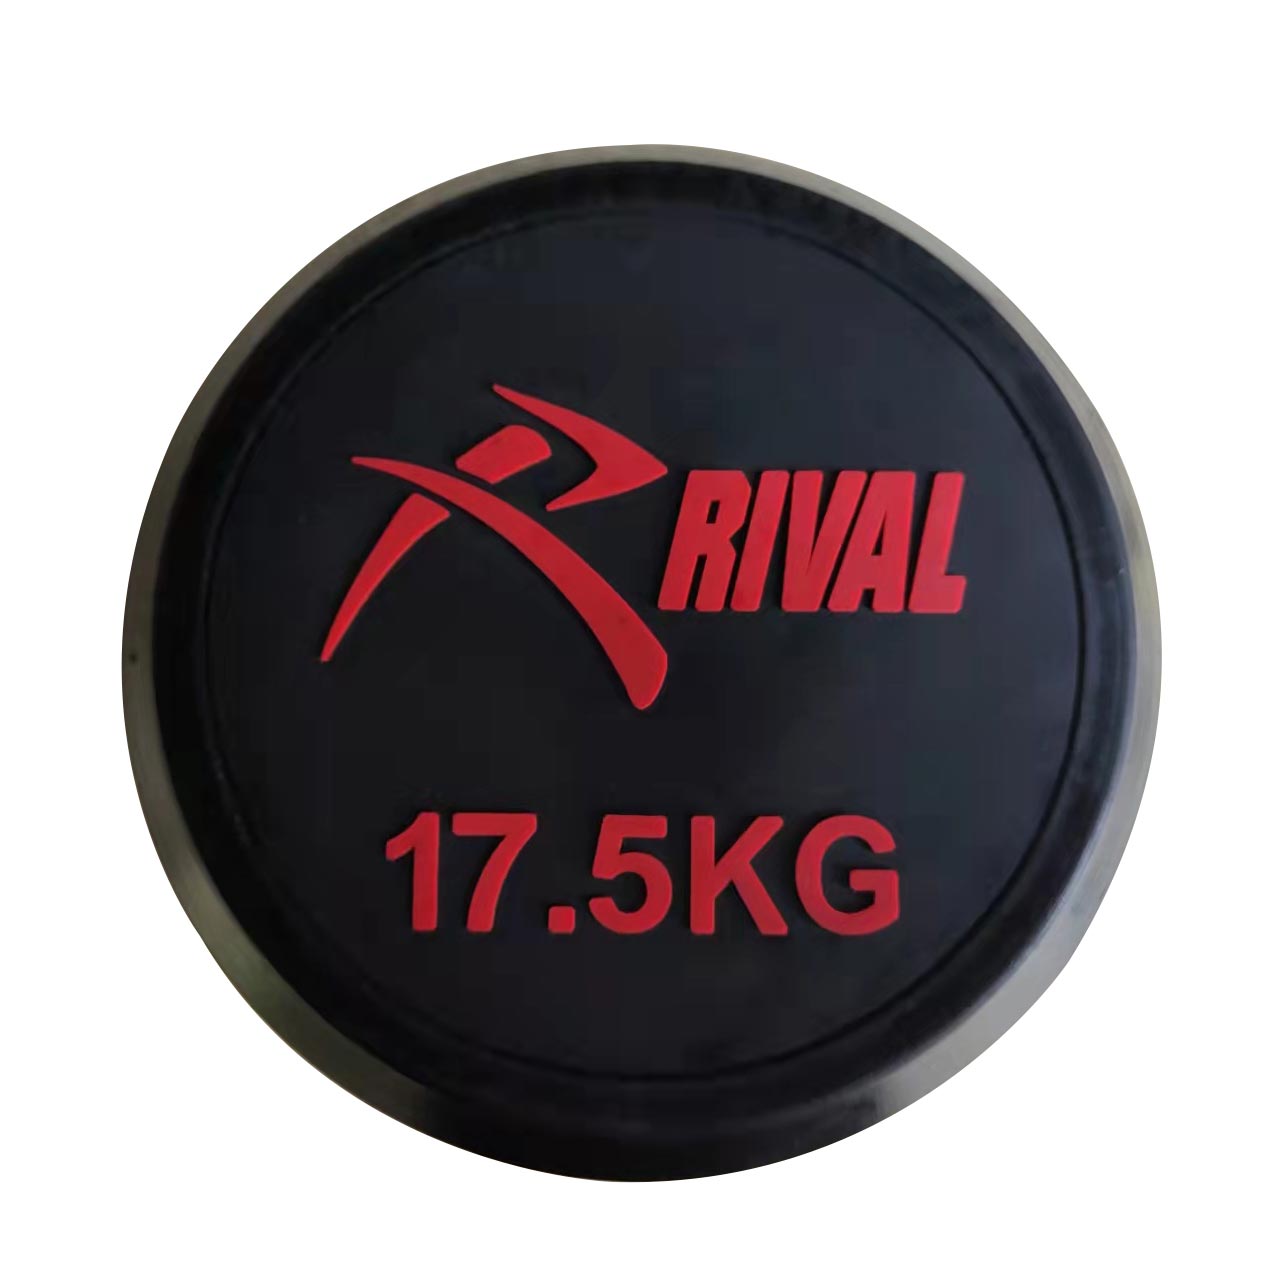 RIVAL ROUND RUBBER DUMBBELLS - 17.5KG PAIR